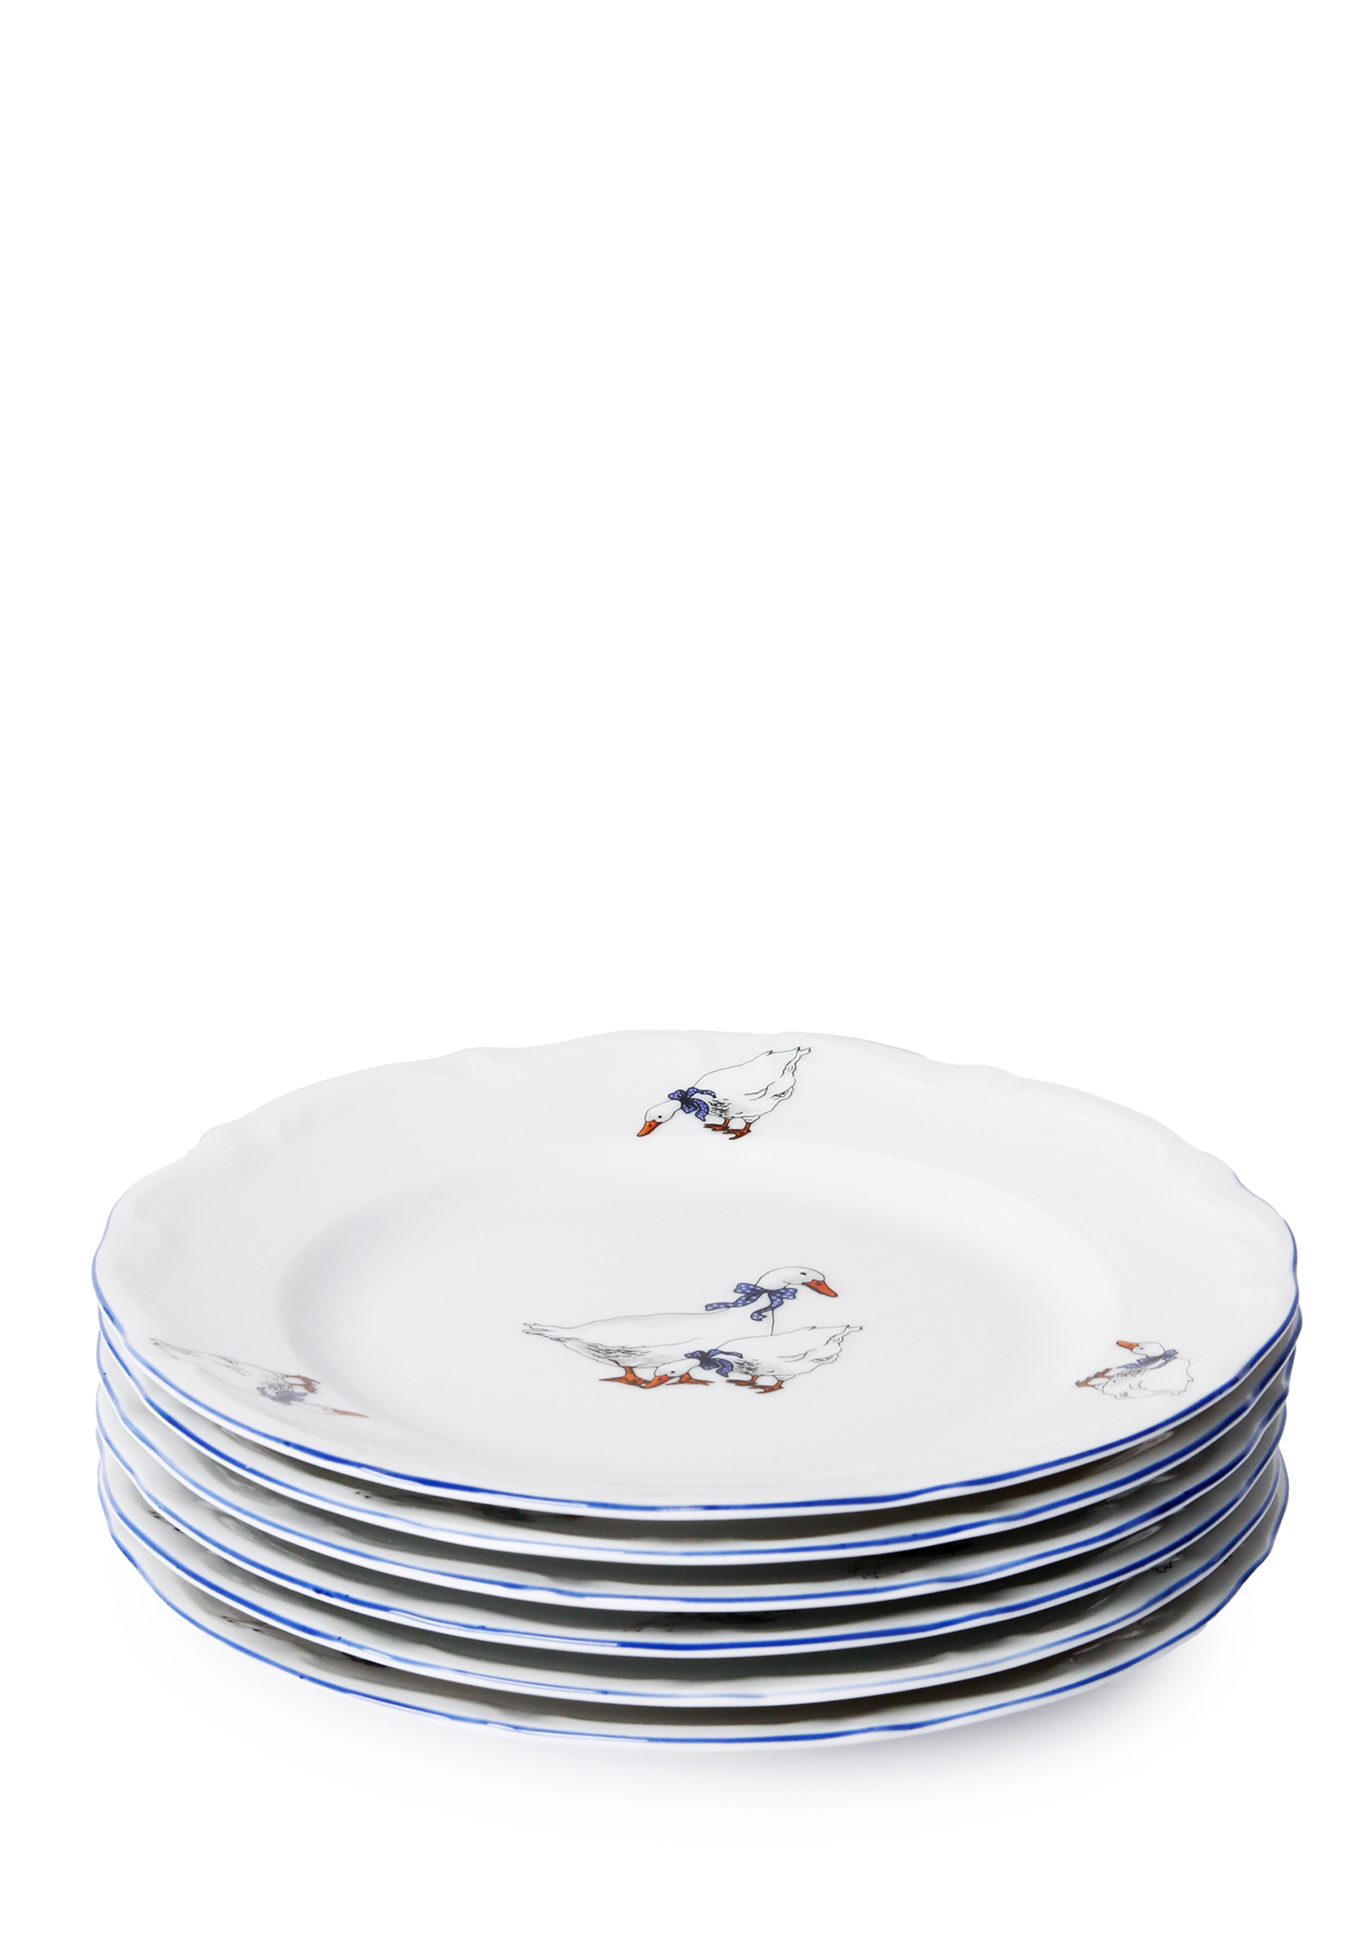 Набор плоских тарелок из чешского фарфора Repast, цвет белый